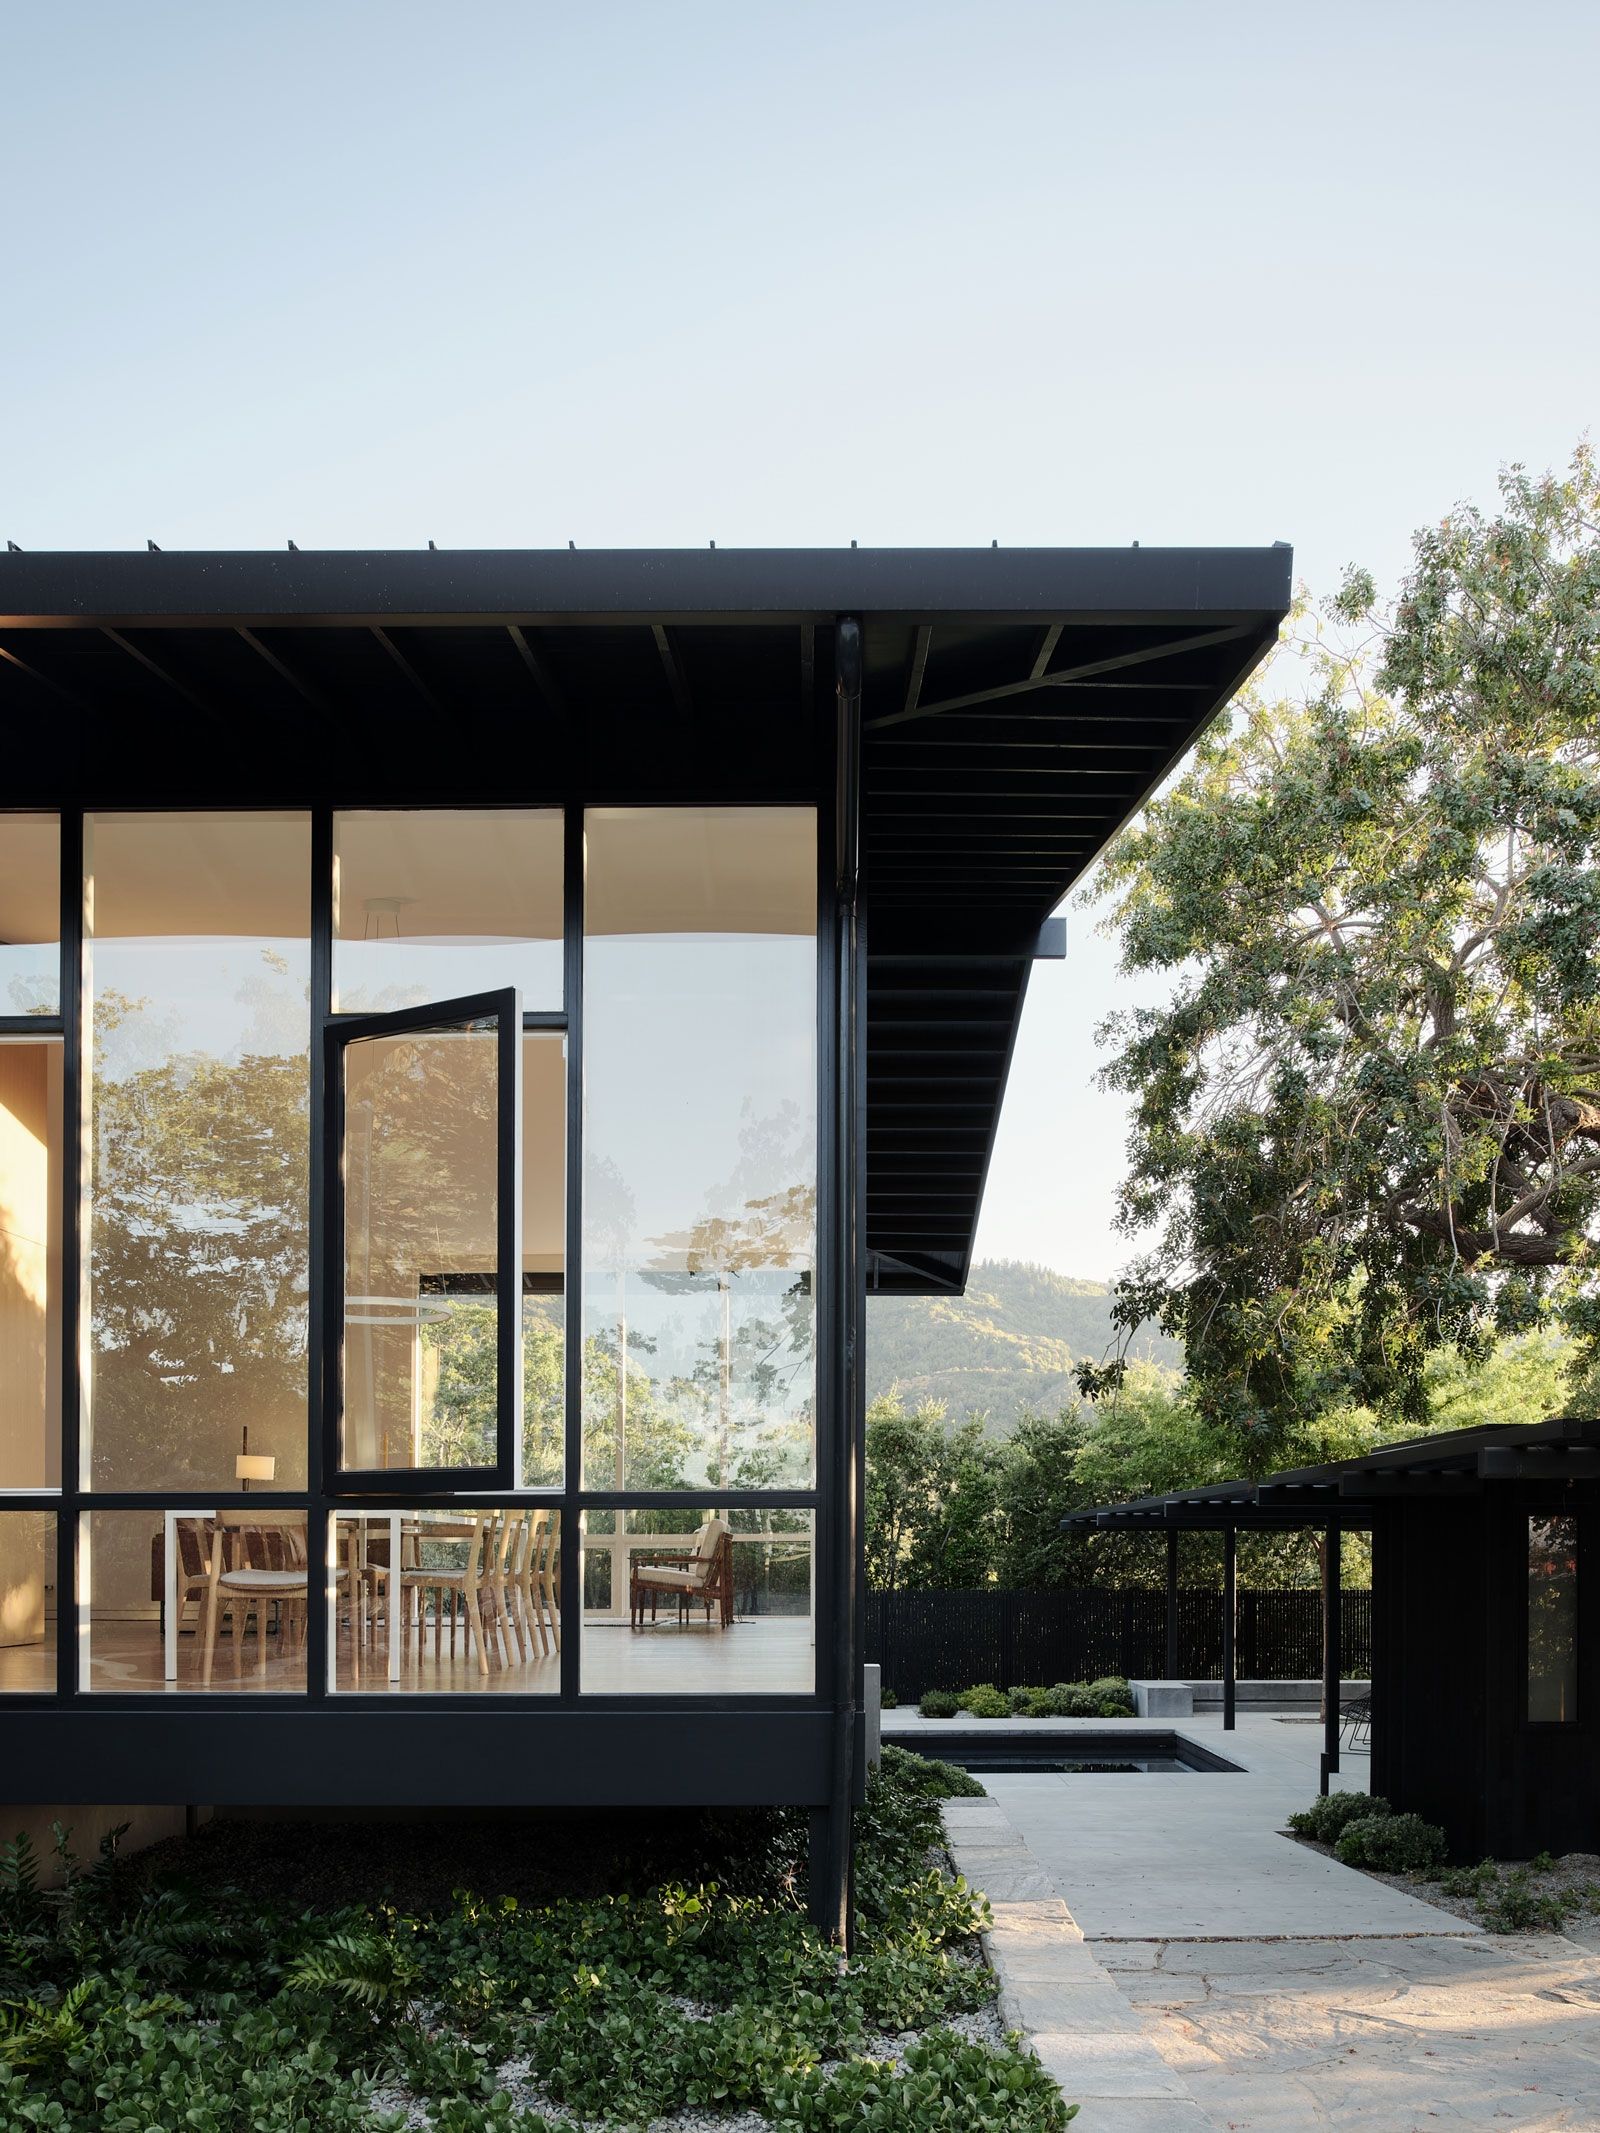 Modernist Home Opened Outdoors Innovative Design Blurs Boundaries Between Indoor and Outdoor Living